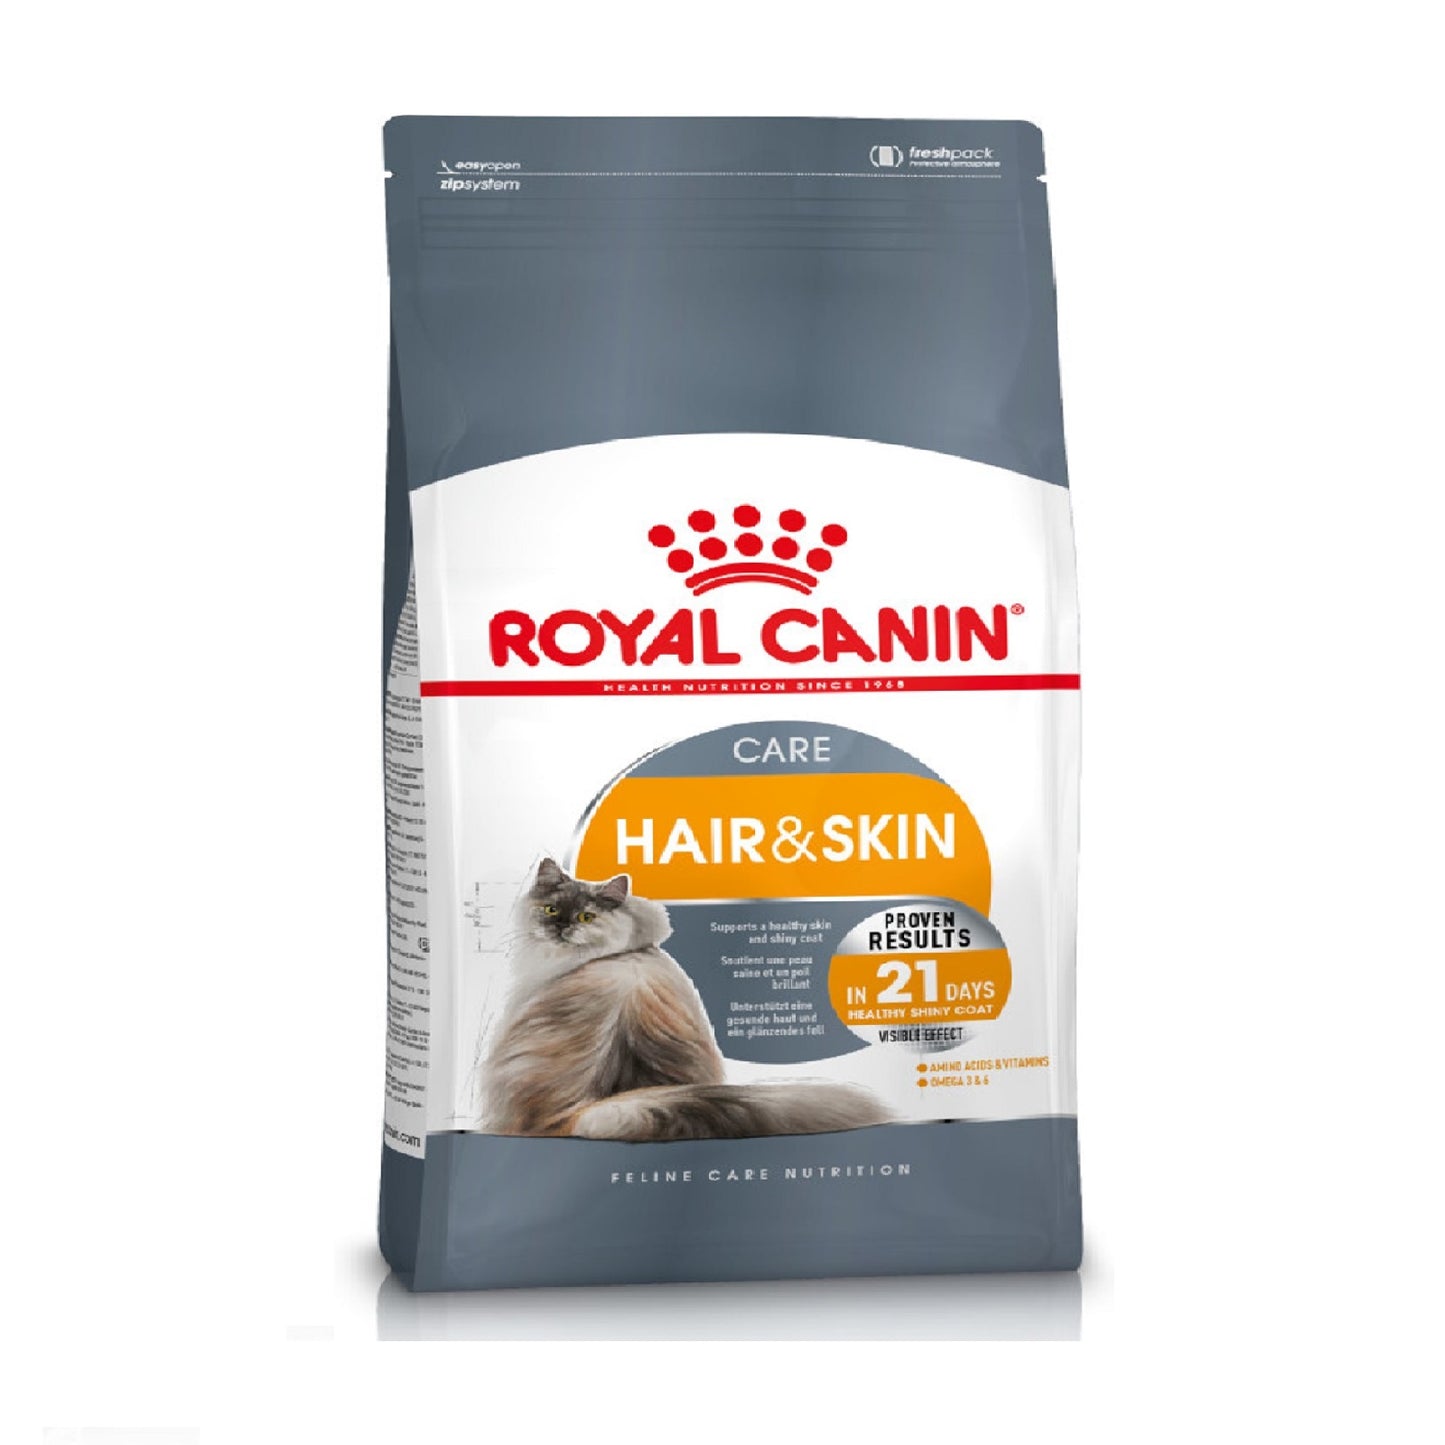 ROYAL CANIN - Hair & Skin Care